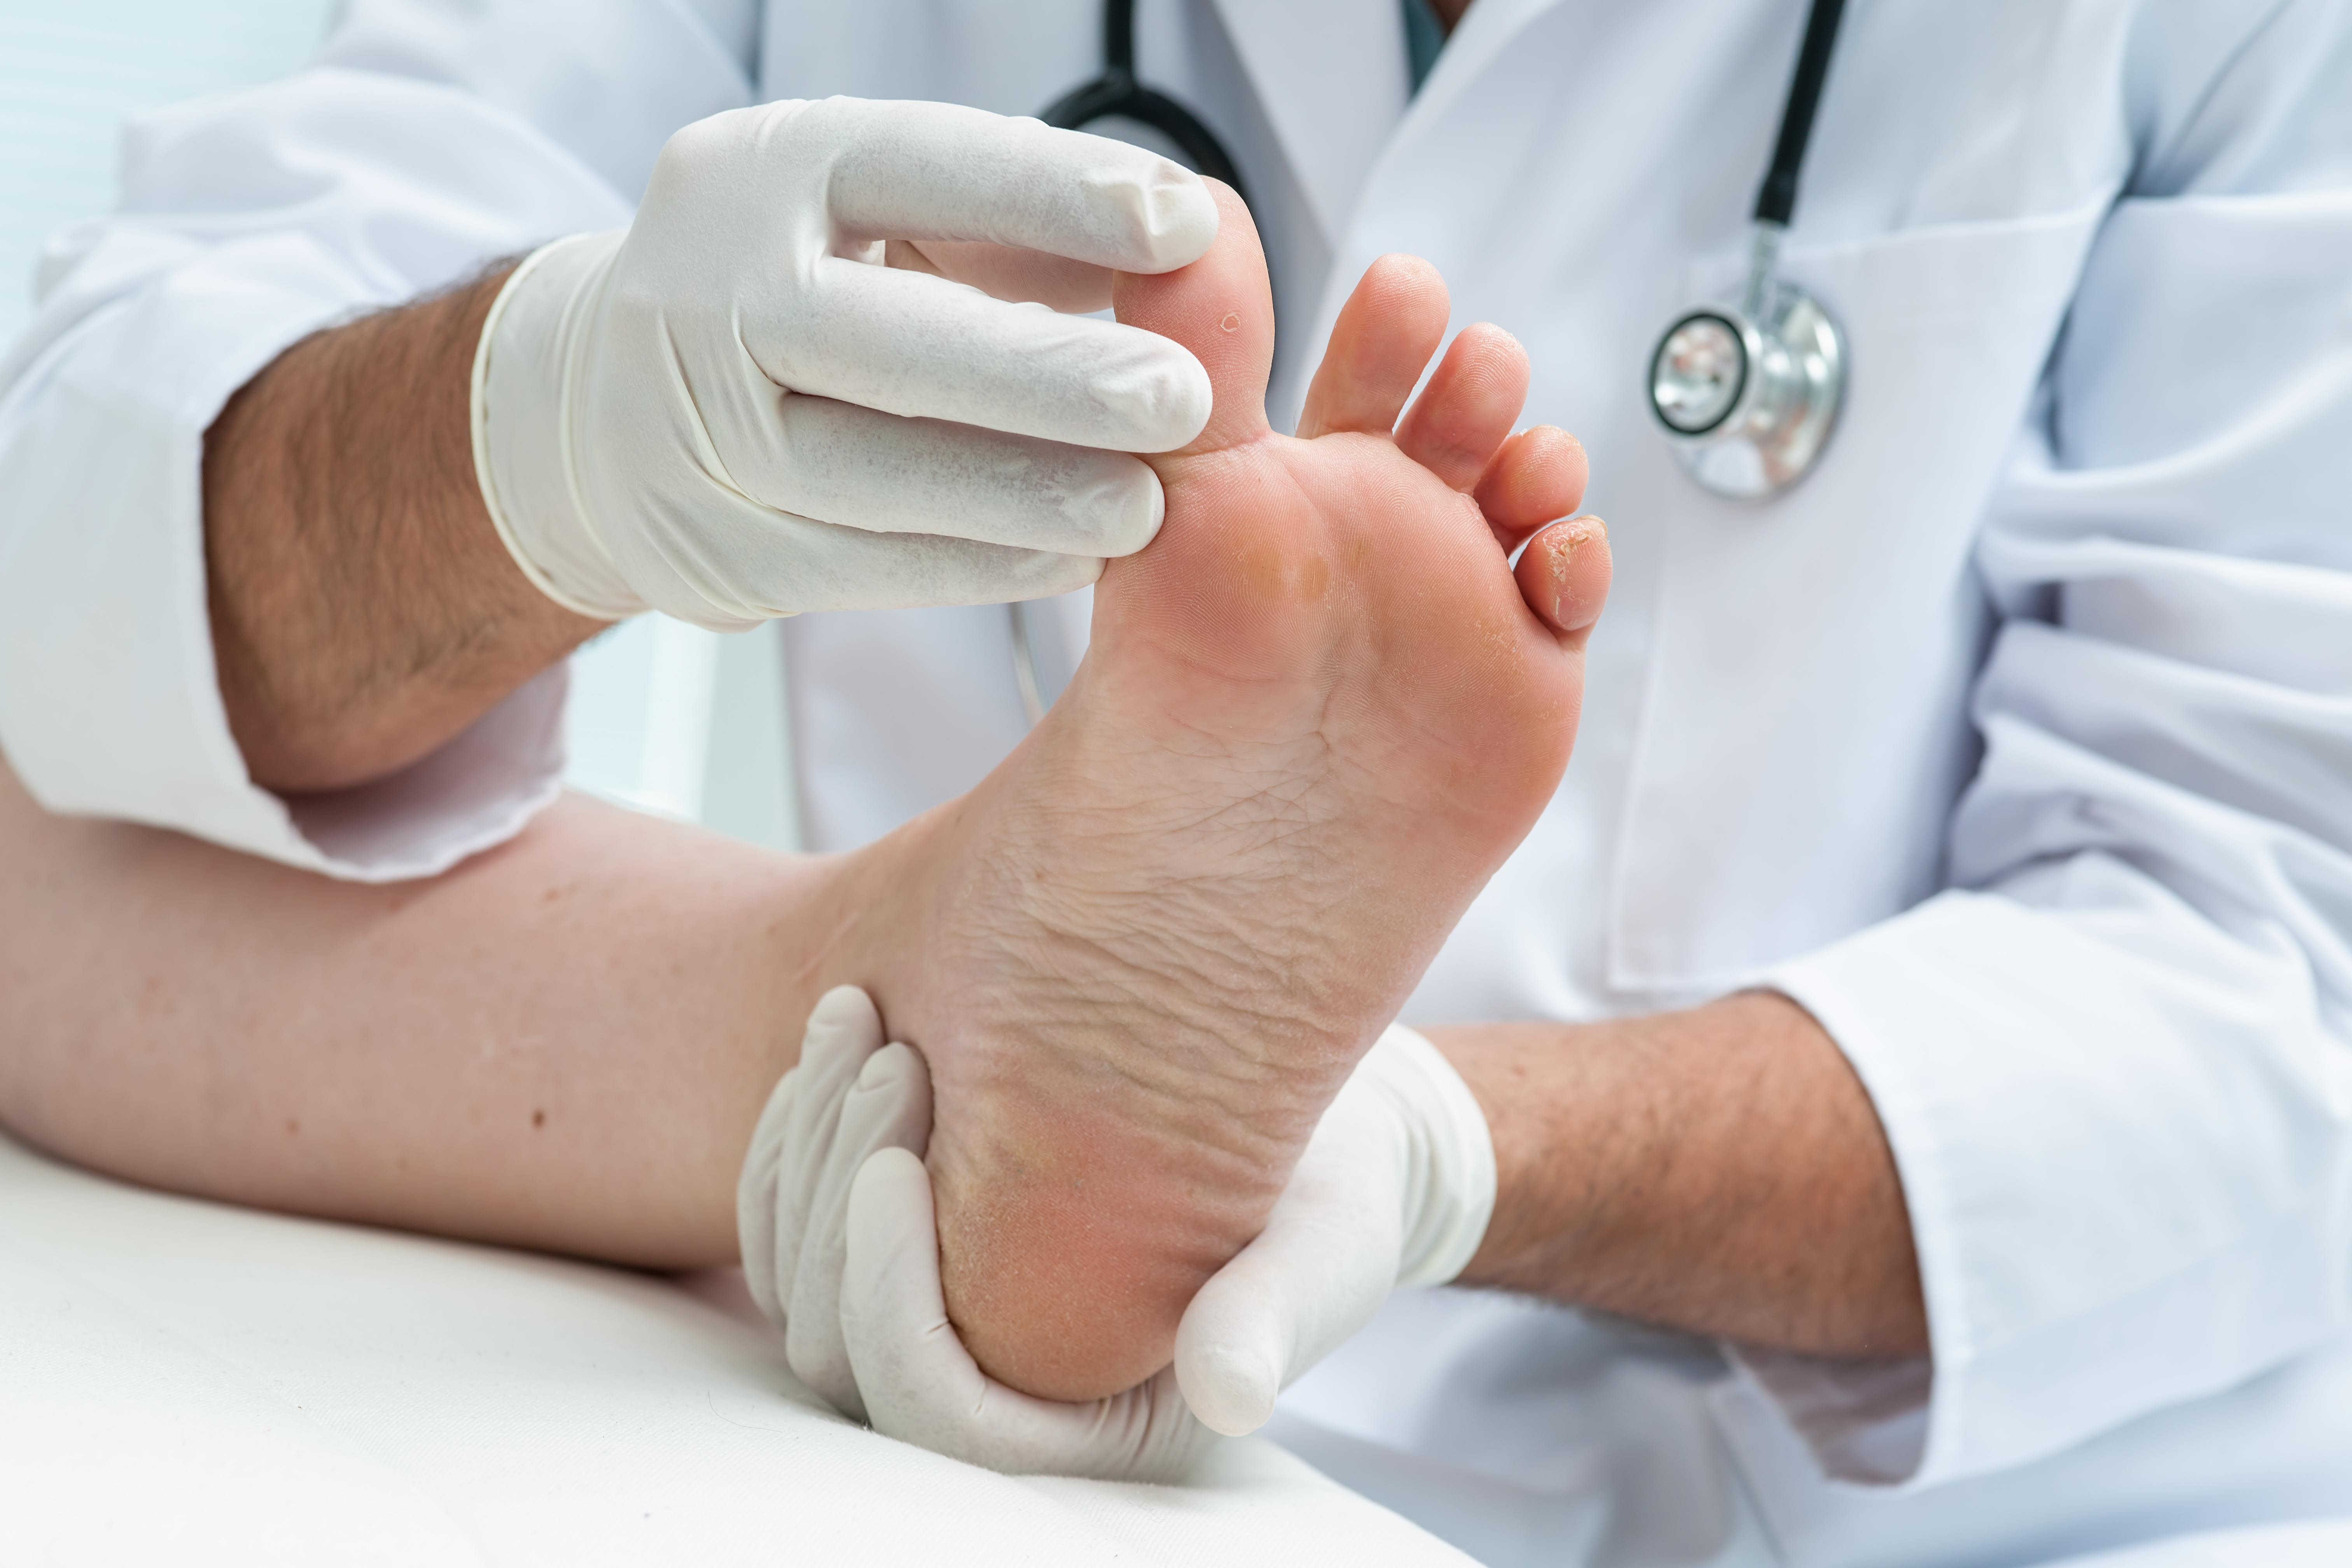 Podiatrist examining patients foot